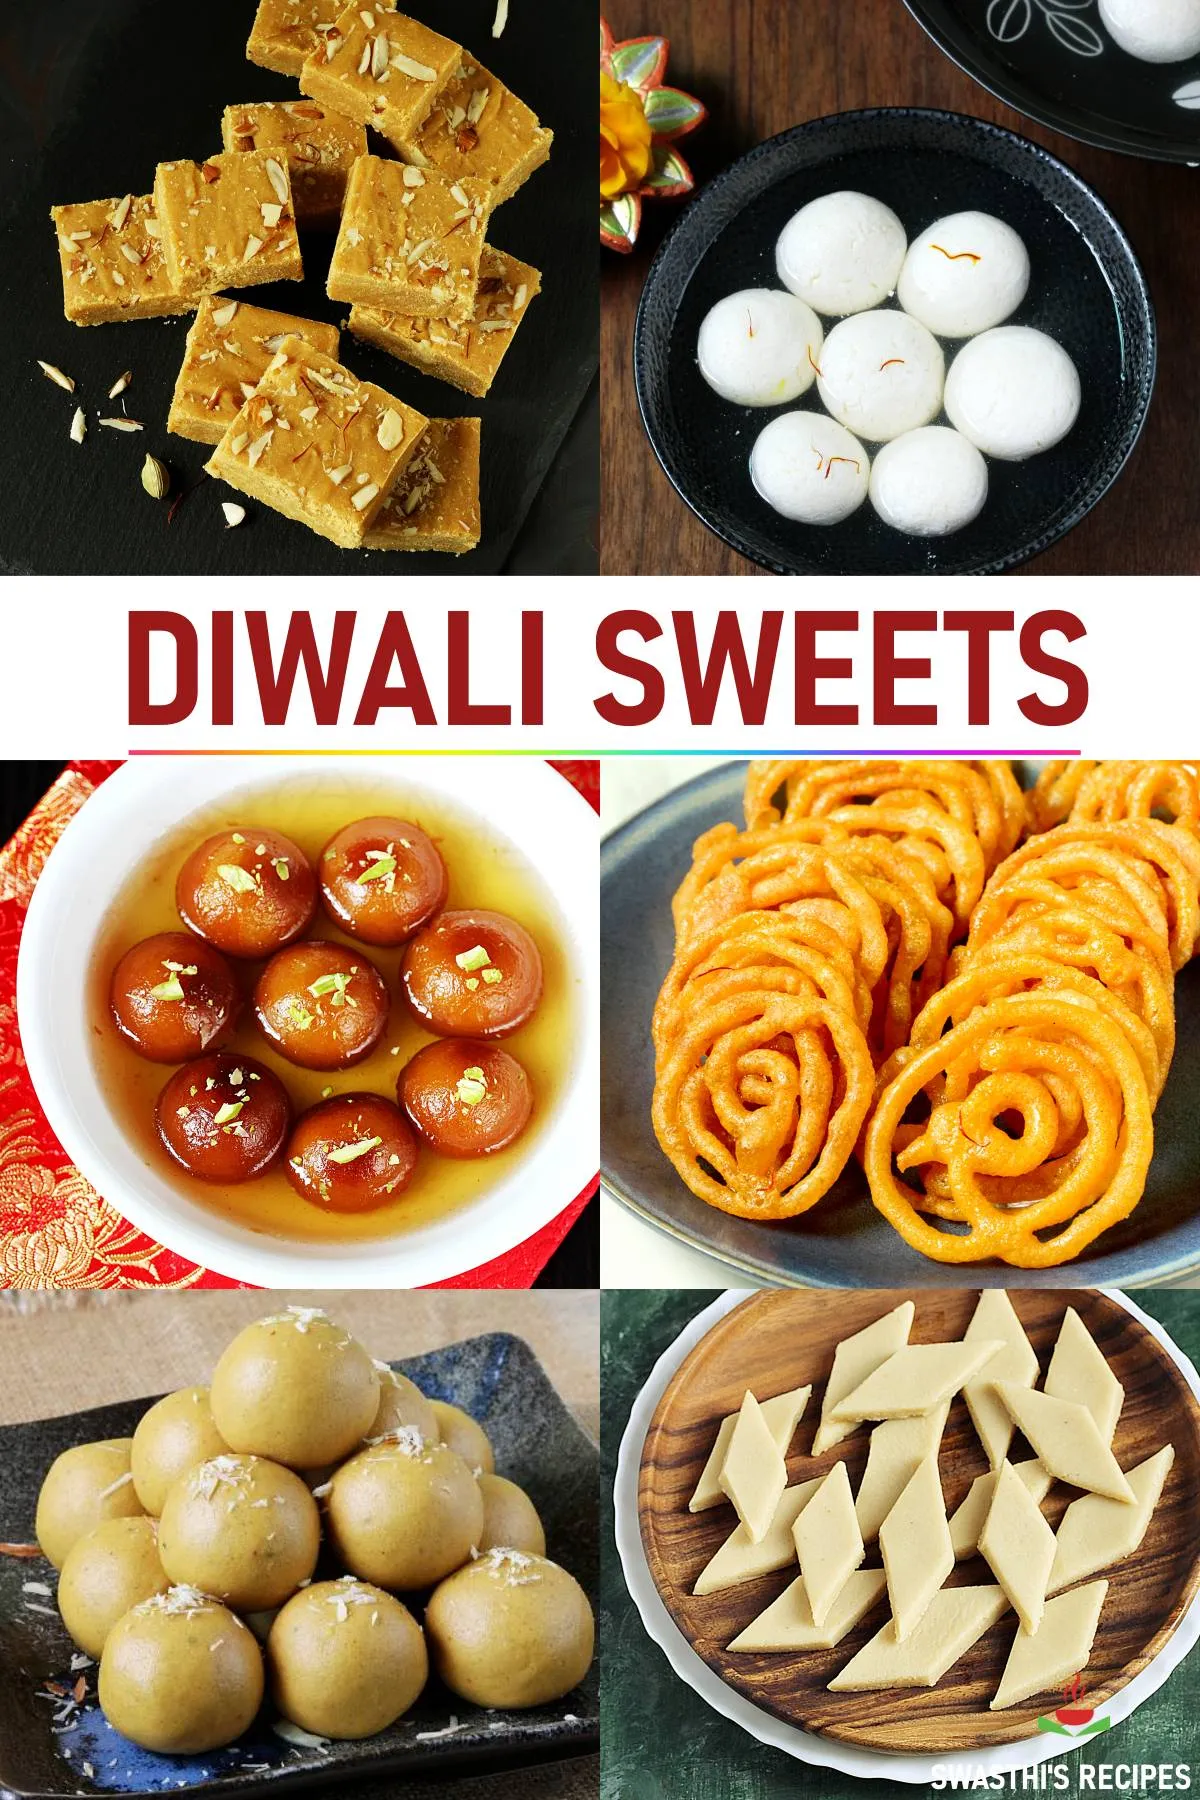 Diwali Sweets Recipes like Burfi, jamun, jalebi, ladoo and kaju katli.